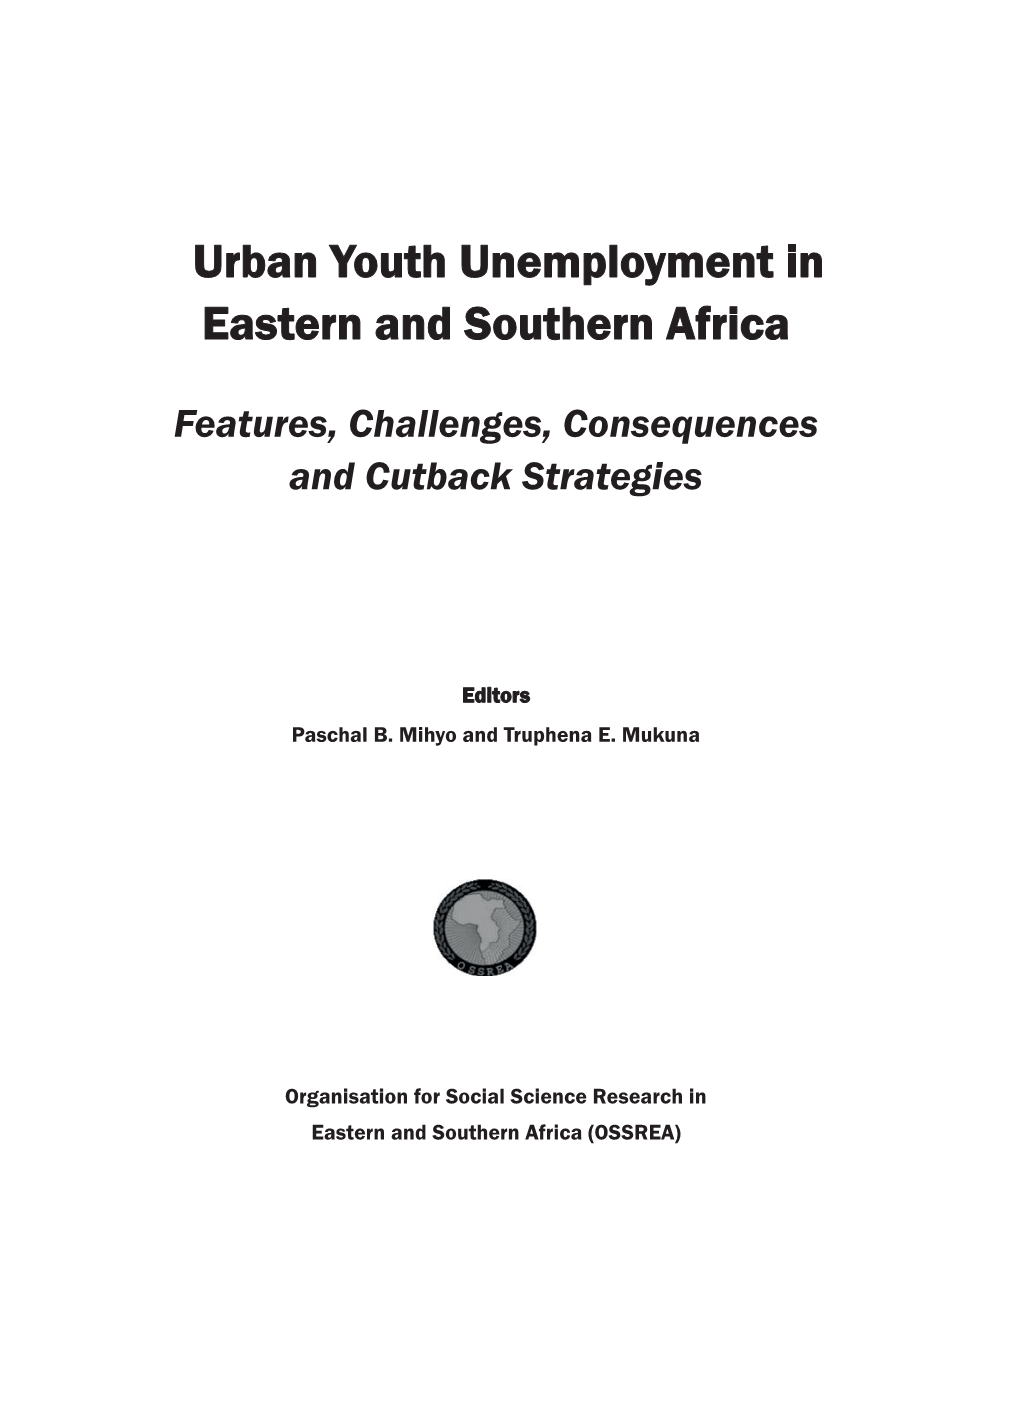 Urban Youth Unemployment Final.Indd